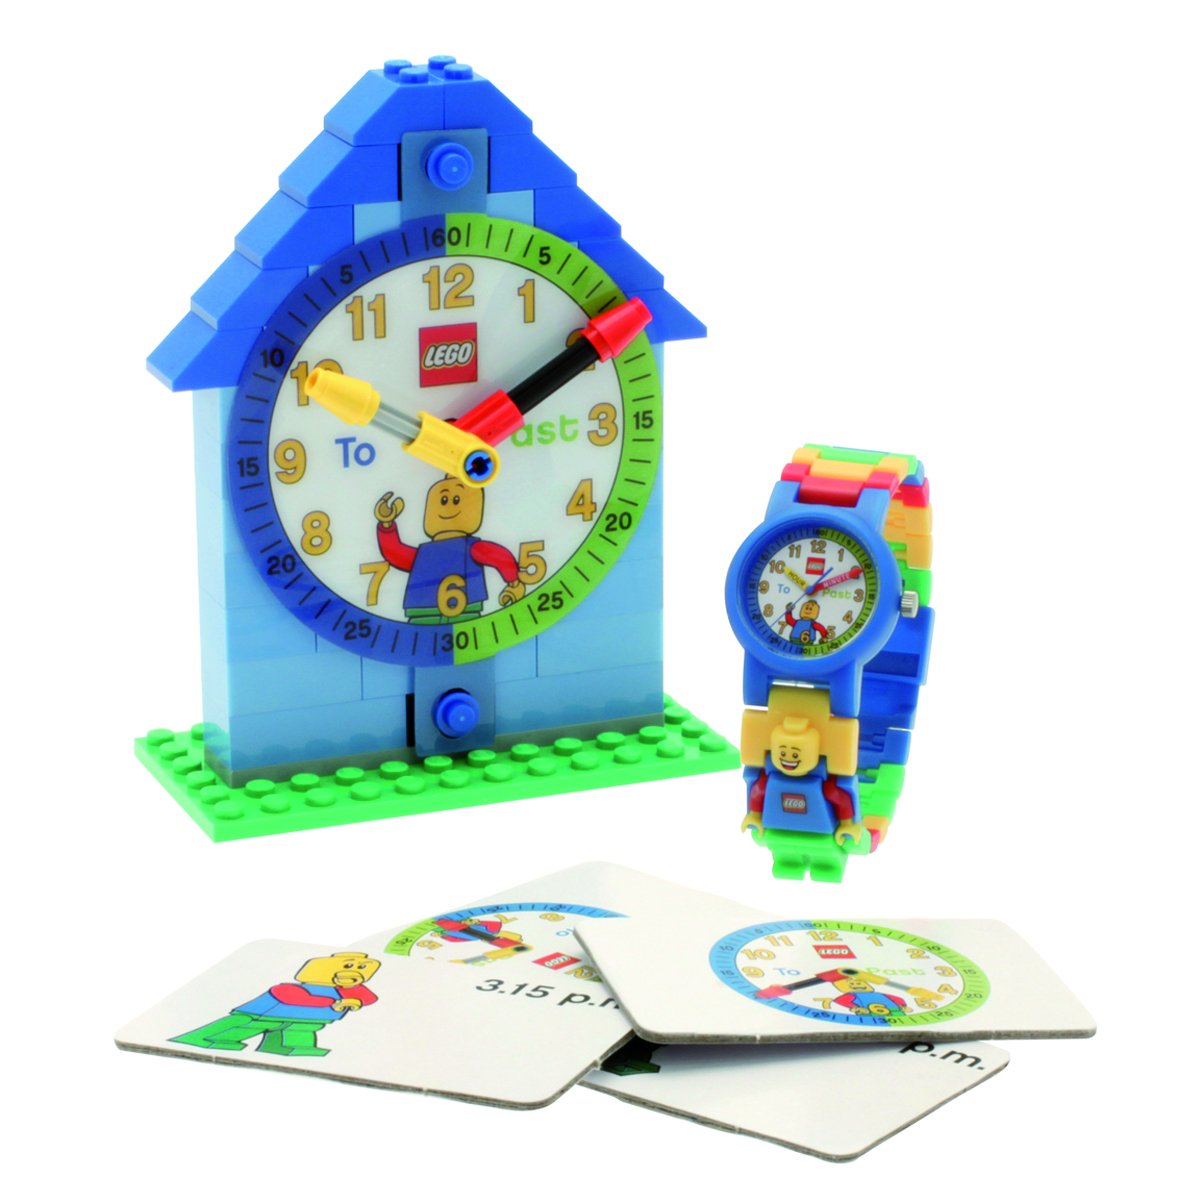 Reloj Clocks Unisex Mod. 9005008